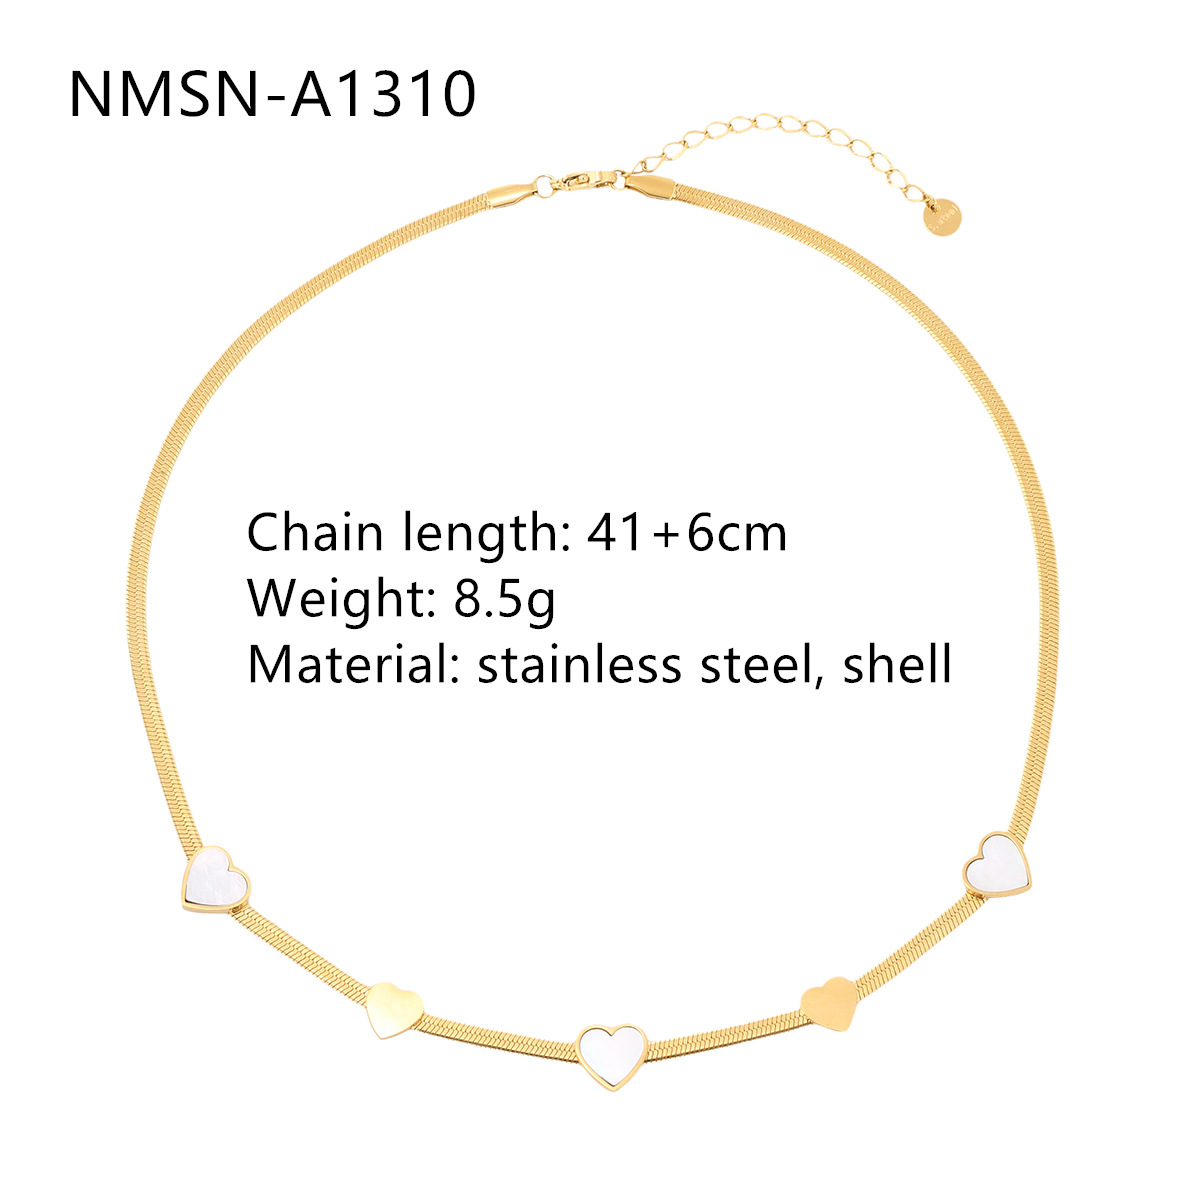 2:NMSN-A1310